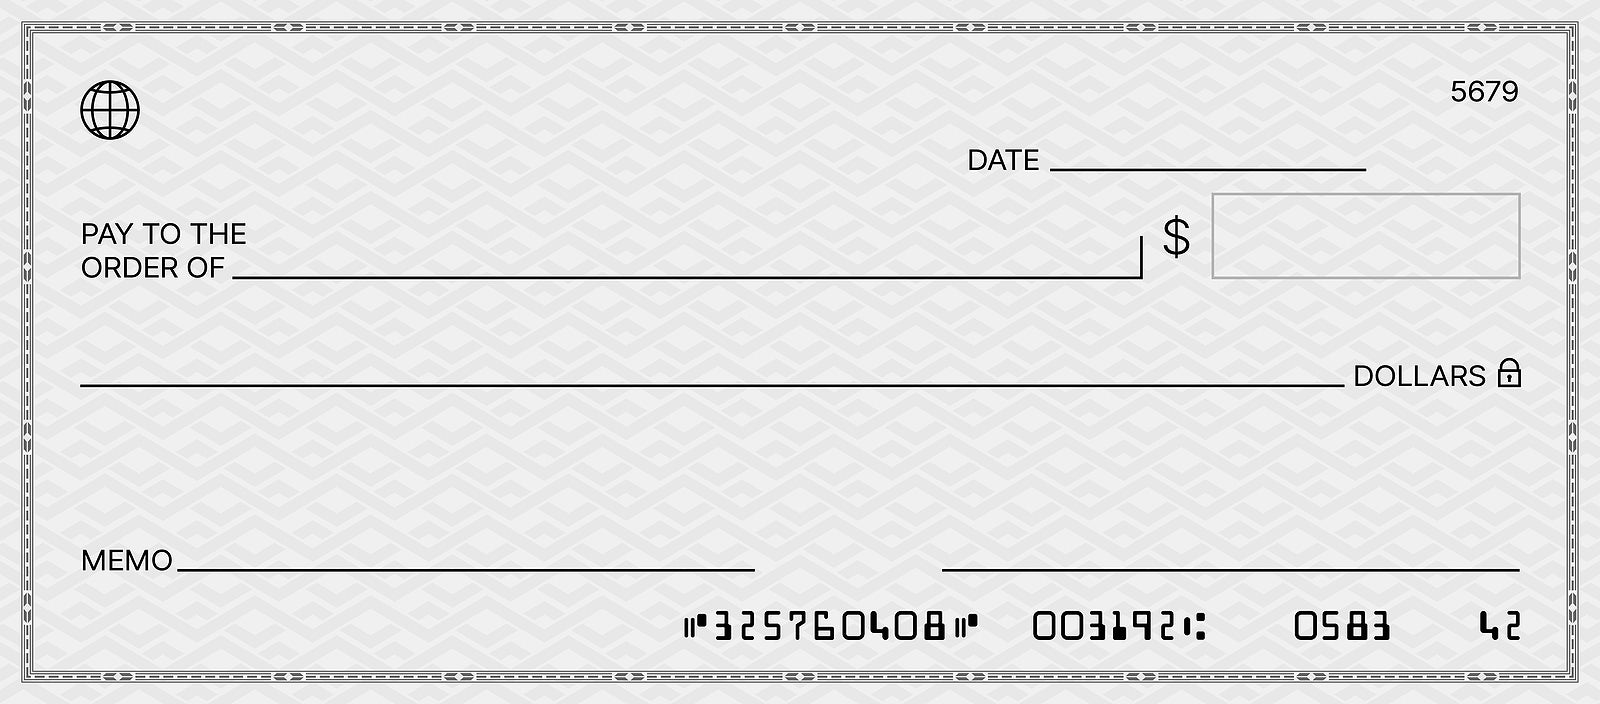 bank check template